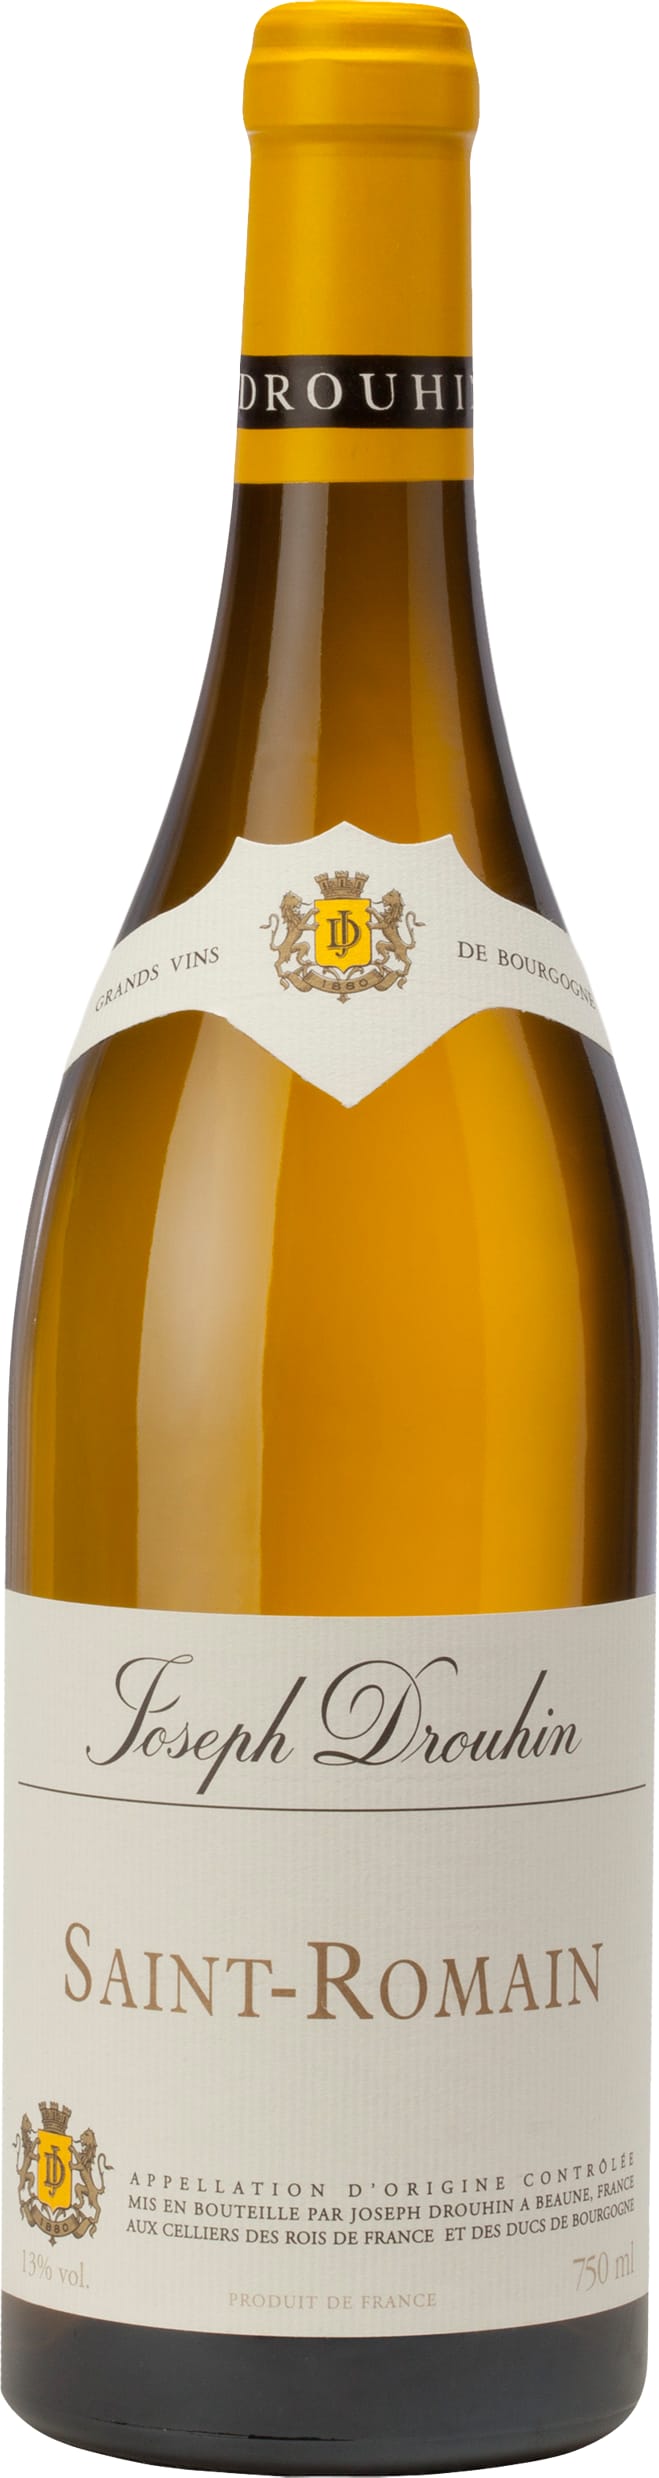 Joseph Drouhin Saint-Romain 2019 75cl - Buy Joseph Drouhin Wines from GREAT WINES DIRECT wine shop